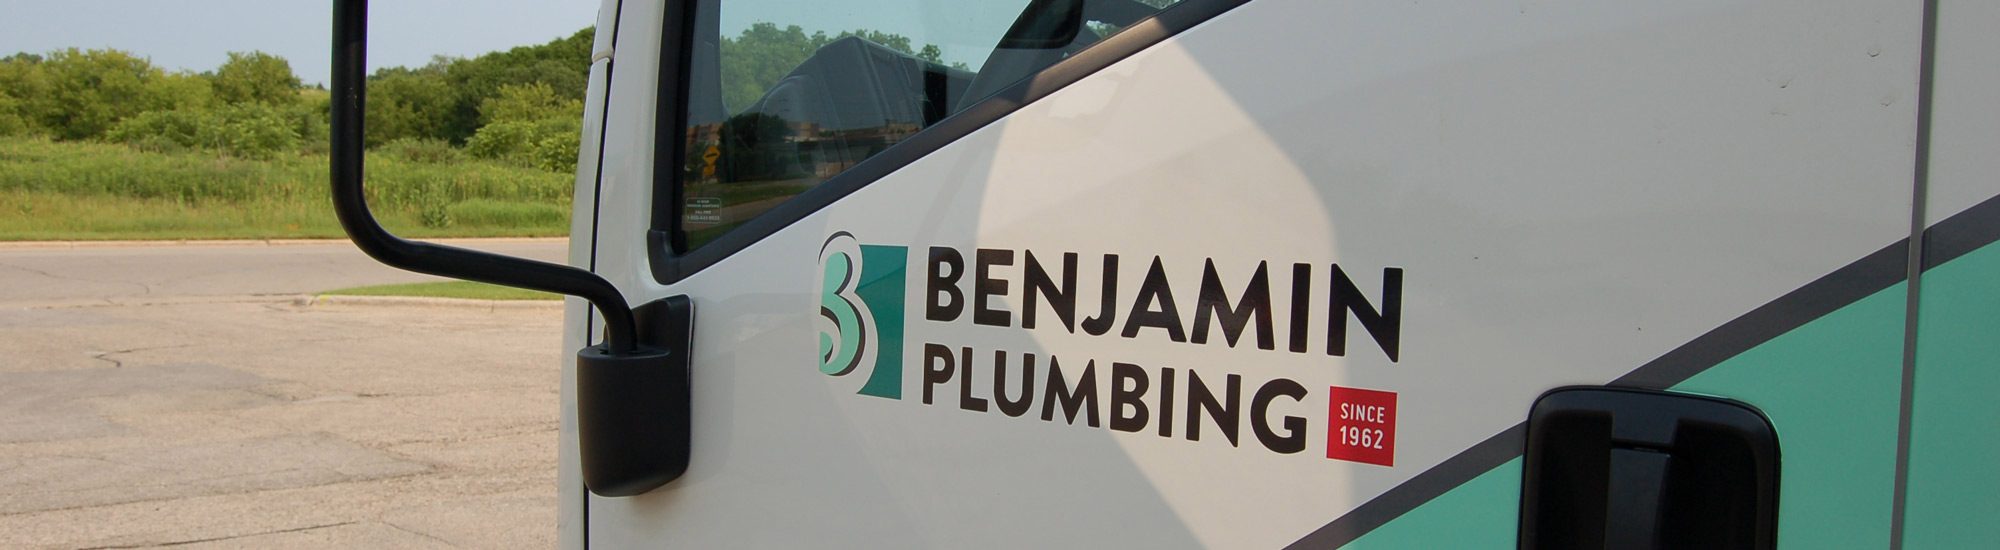 Photo of Benjamin Plumbing logo on truck